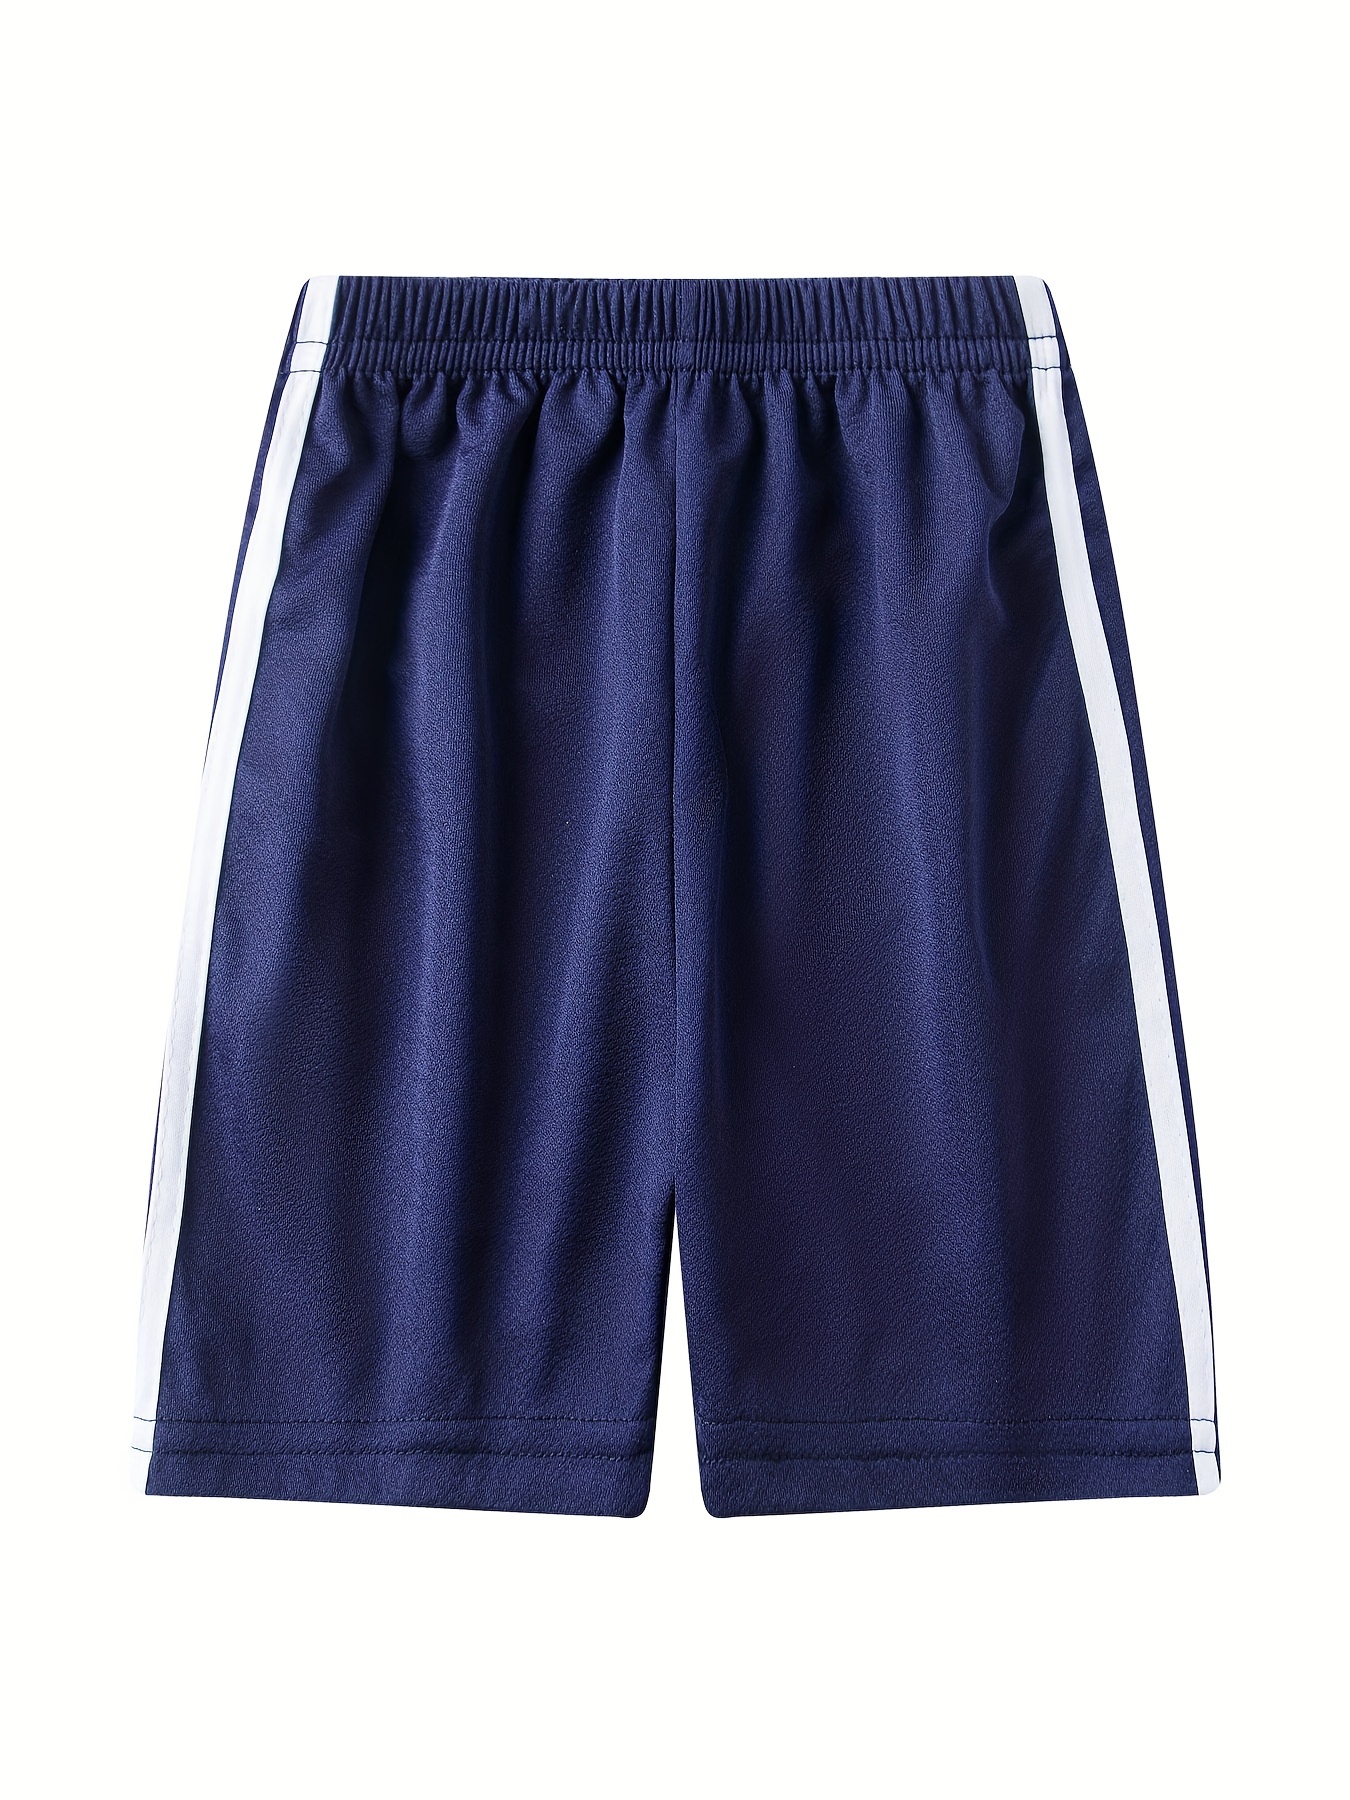 Active Dazzle Shorts (Little Boys & Big Boys) - Walmart.com